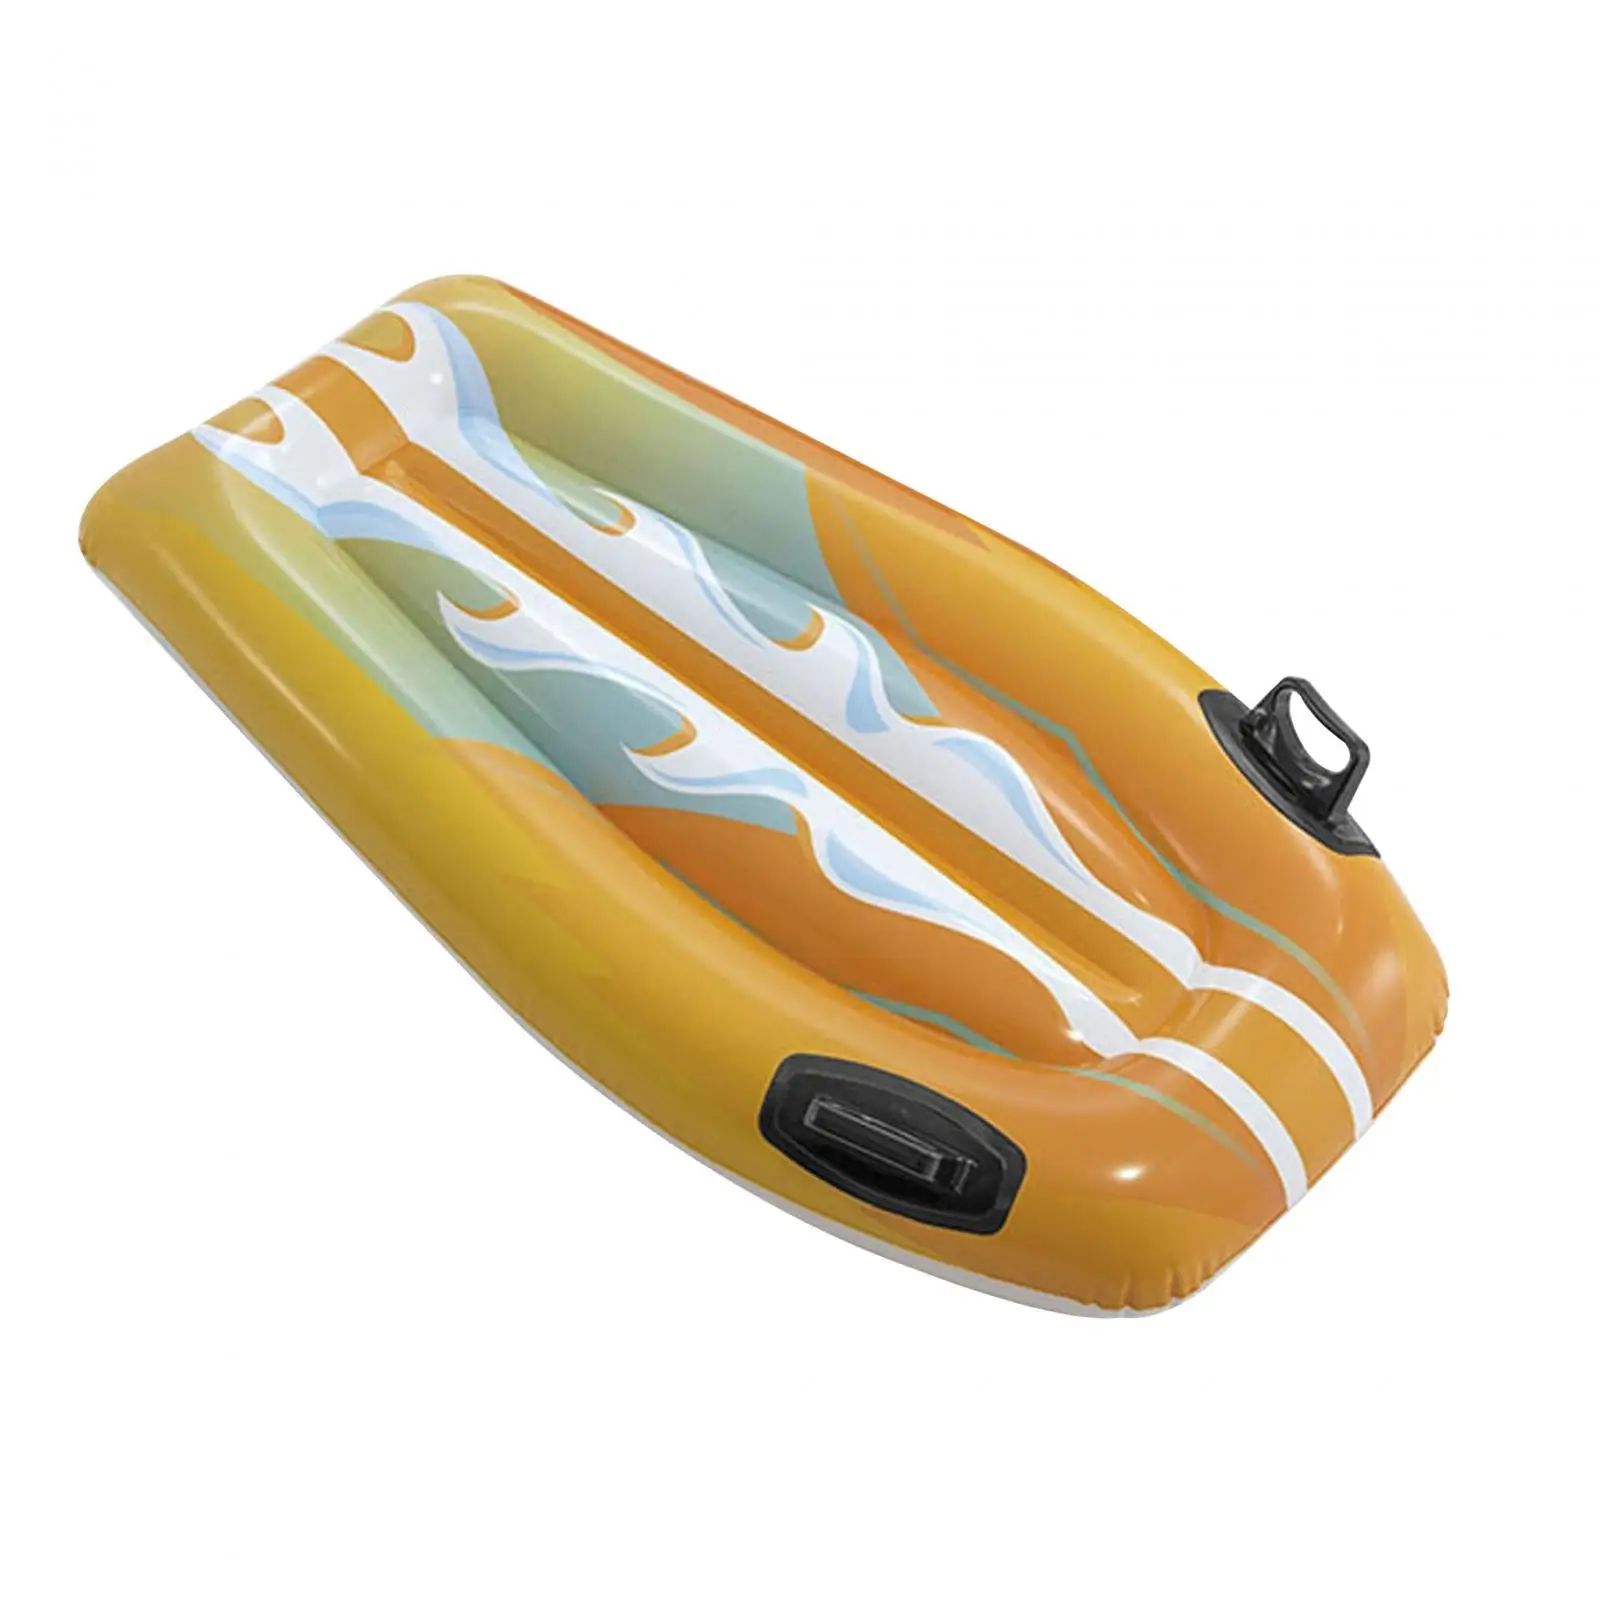 Inflatable Surfboard for Kids Portable Lightweight Beach Swim Kickboard Surf Board Surfing Board Inflatable Boards